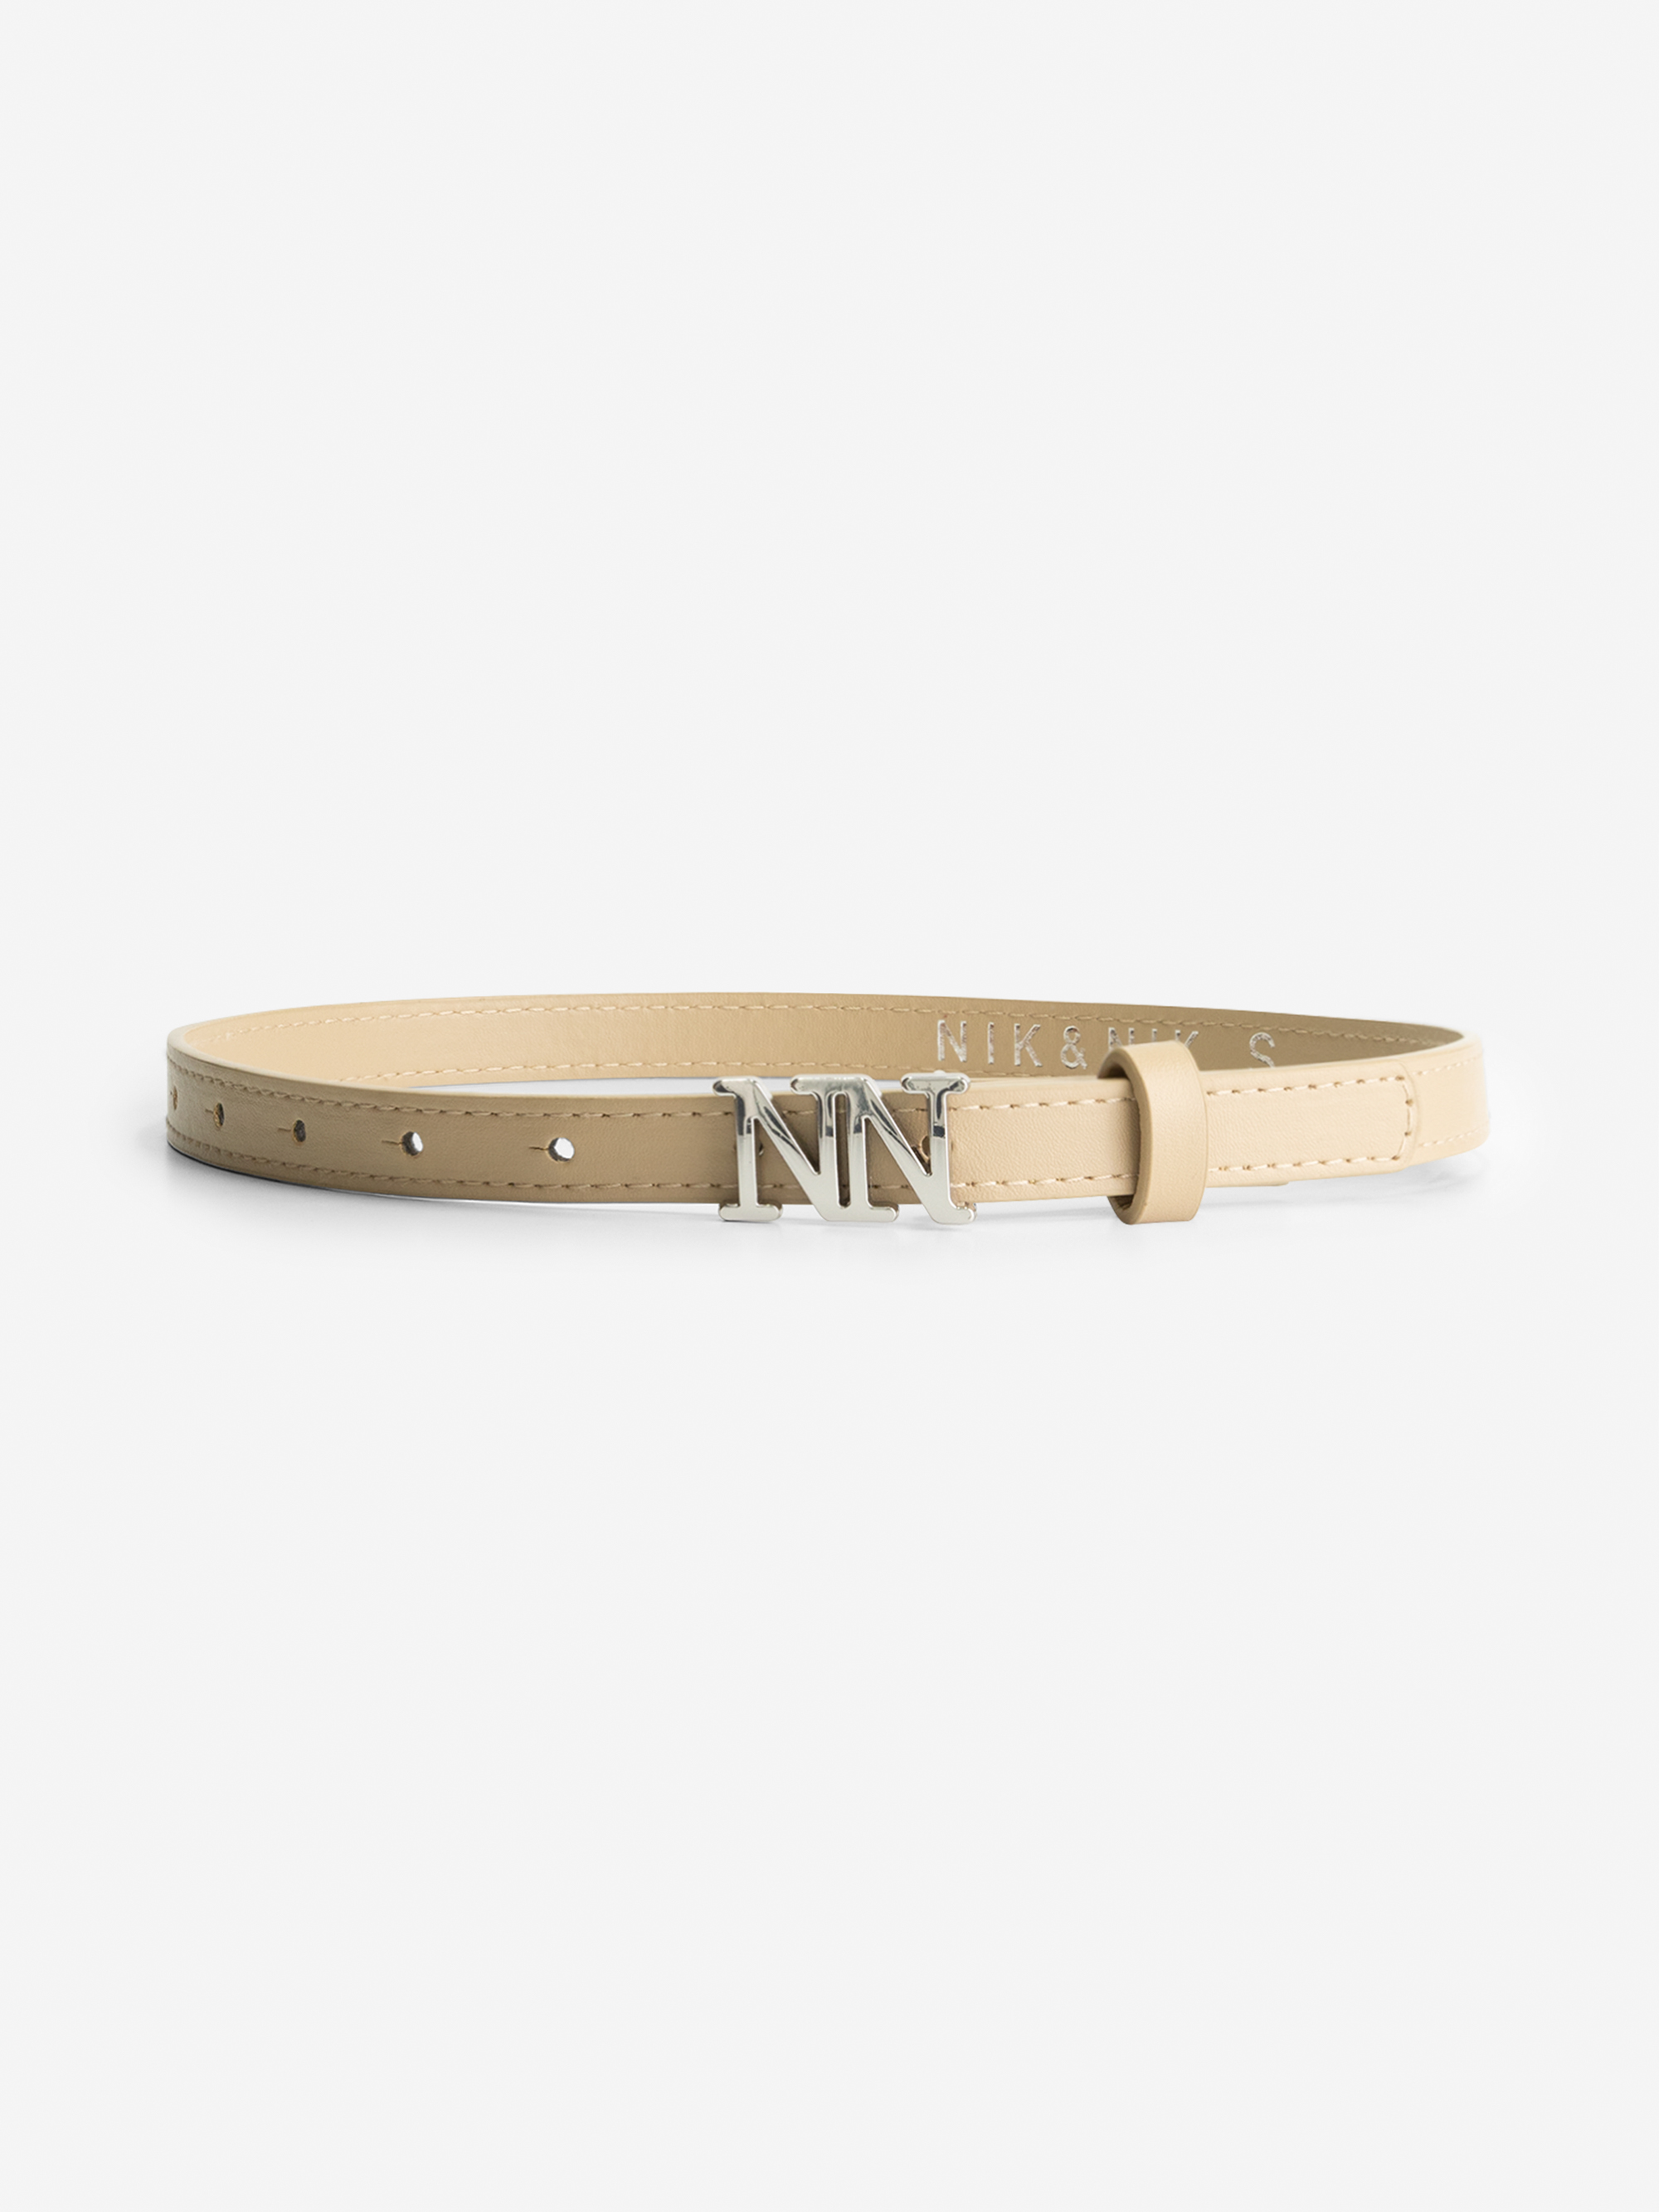 Classic belt with NN